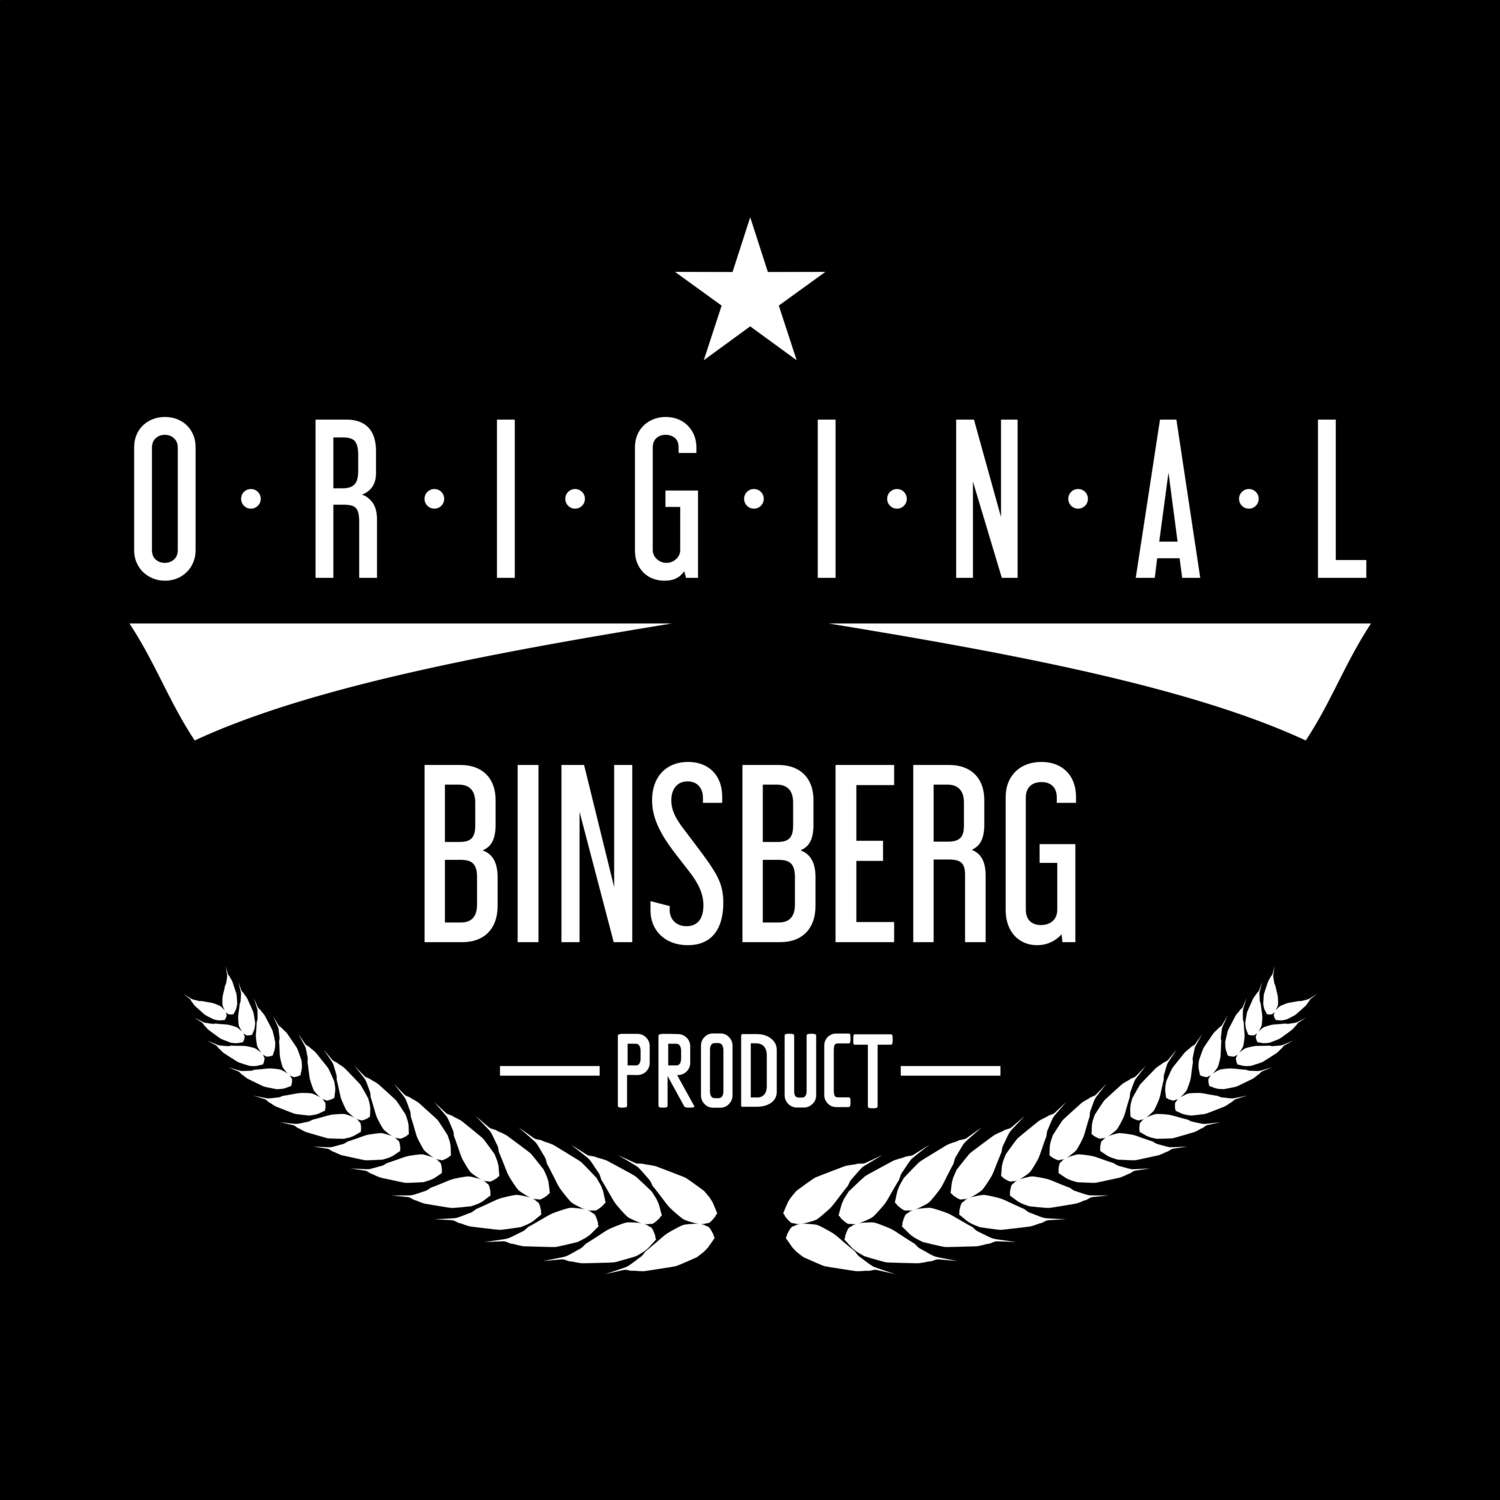 Binsberg T-Shirt »Original Product«